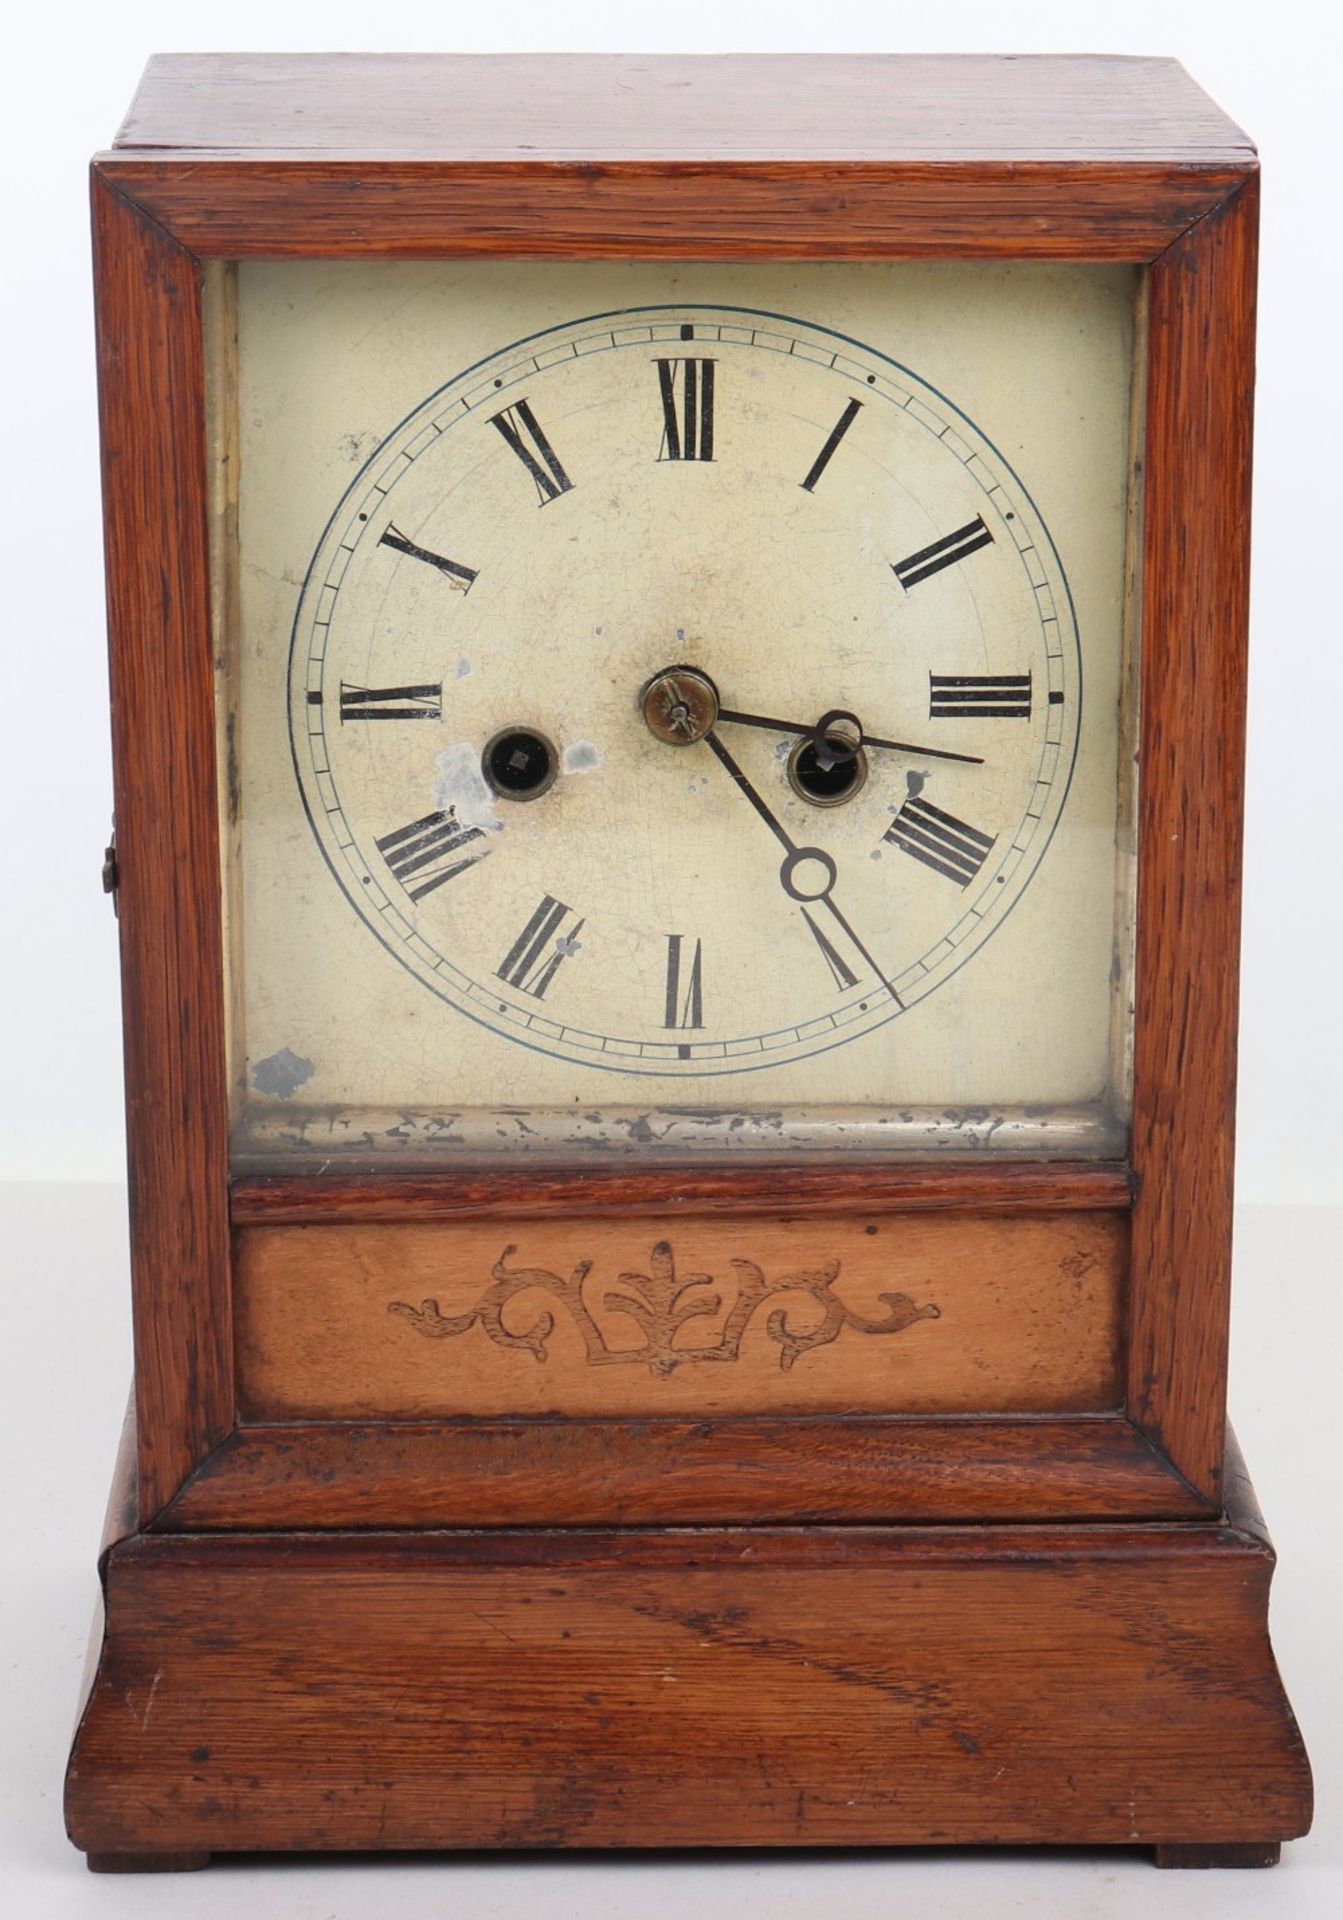 Three 19th century mantle clocks - Image 2 of 3